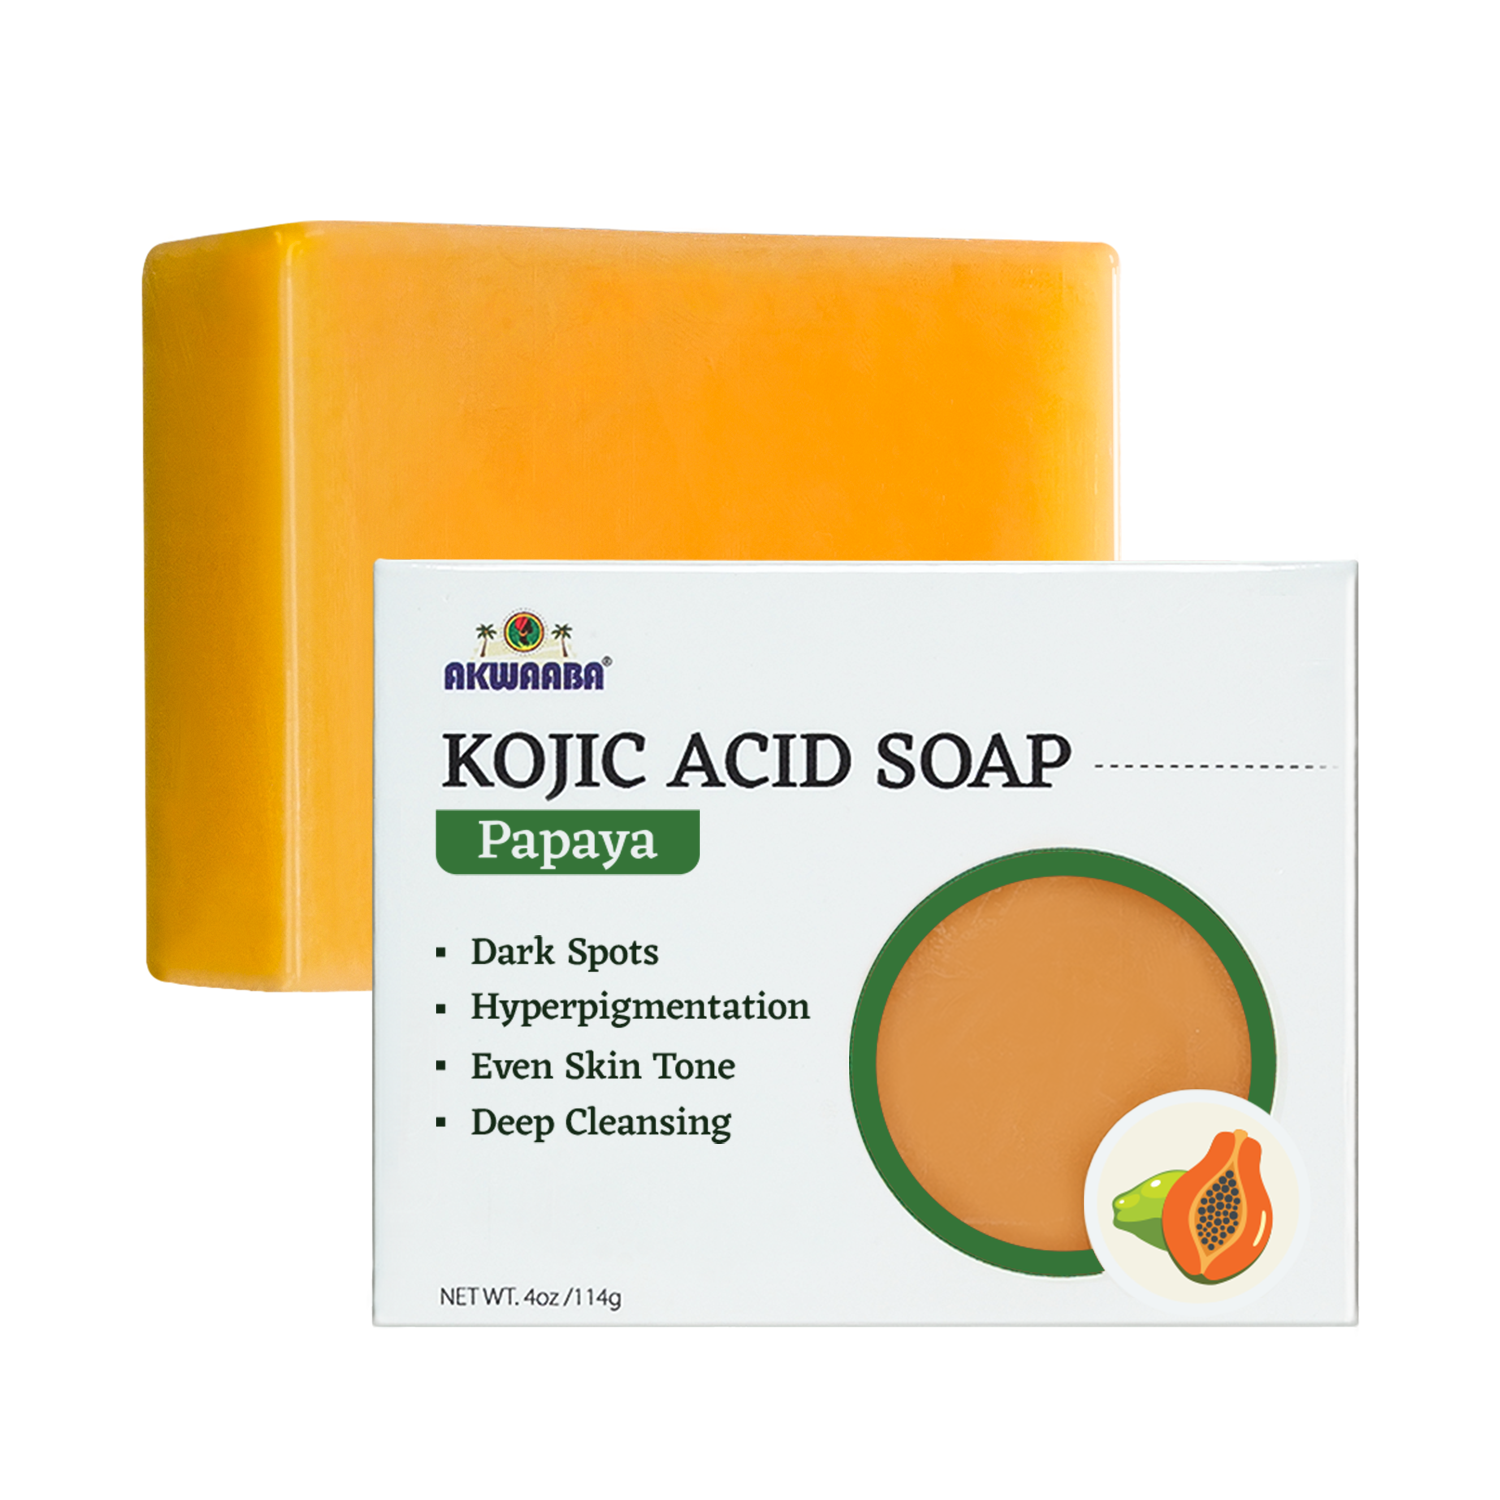 Akwaaba Kojic Acid with Papaya Soap Bar 4oz